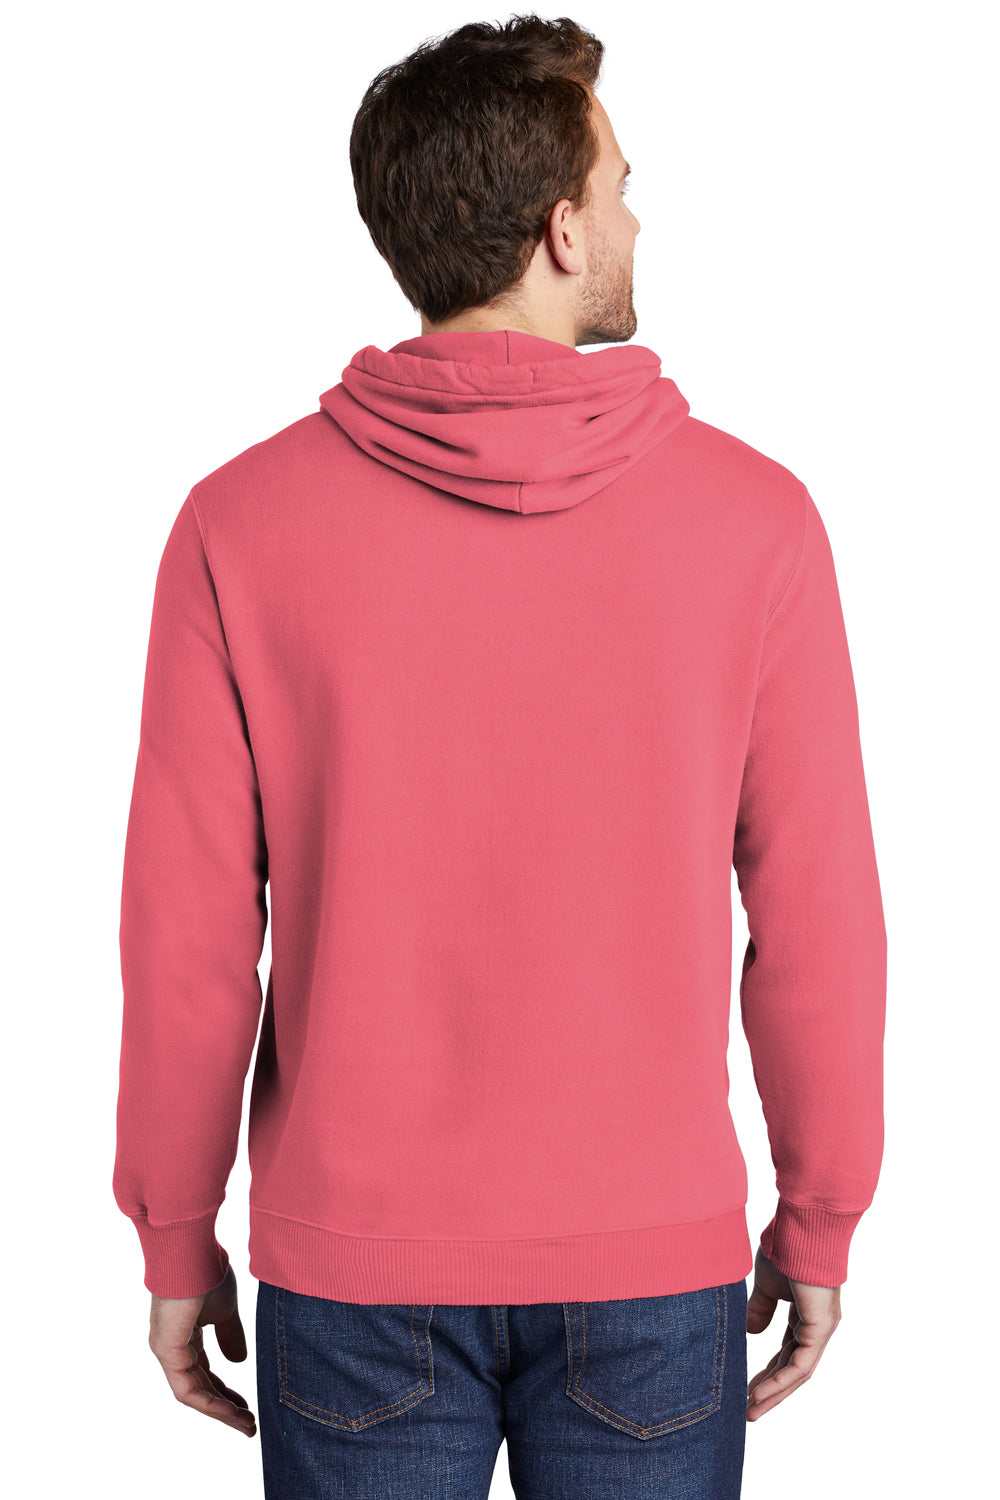 Port & Company PC098H Mens Beach Wash Fleece Hooded Sweatshirt Hoodie Fruit Punch Pink Back